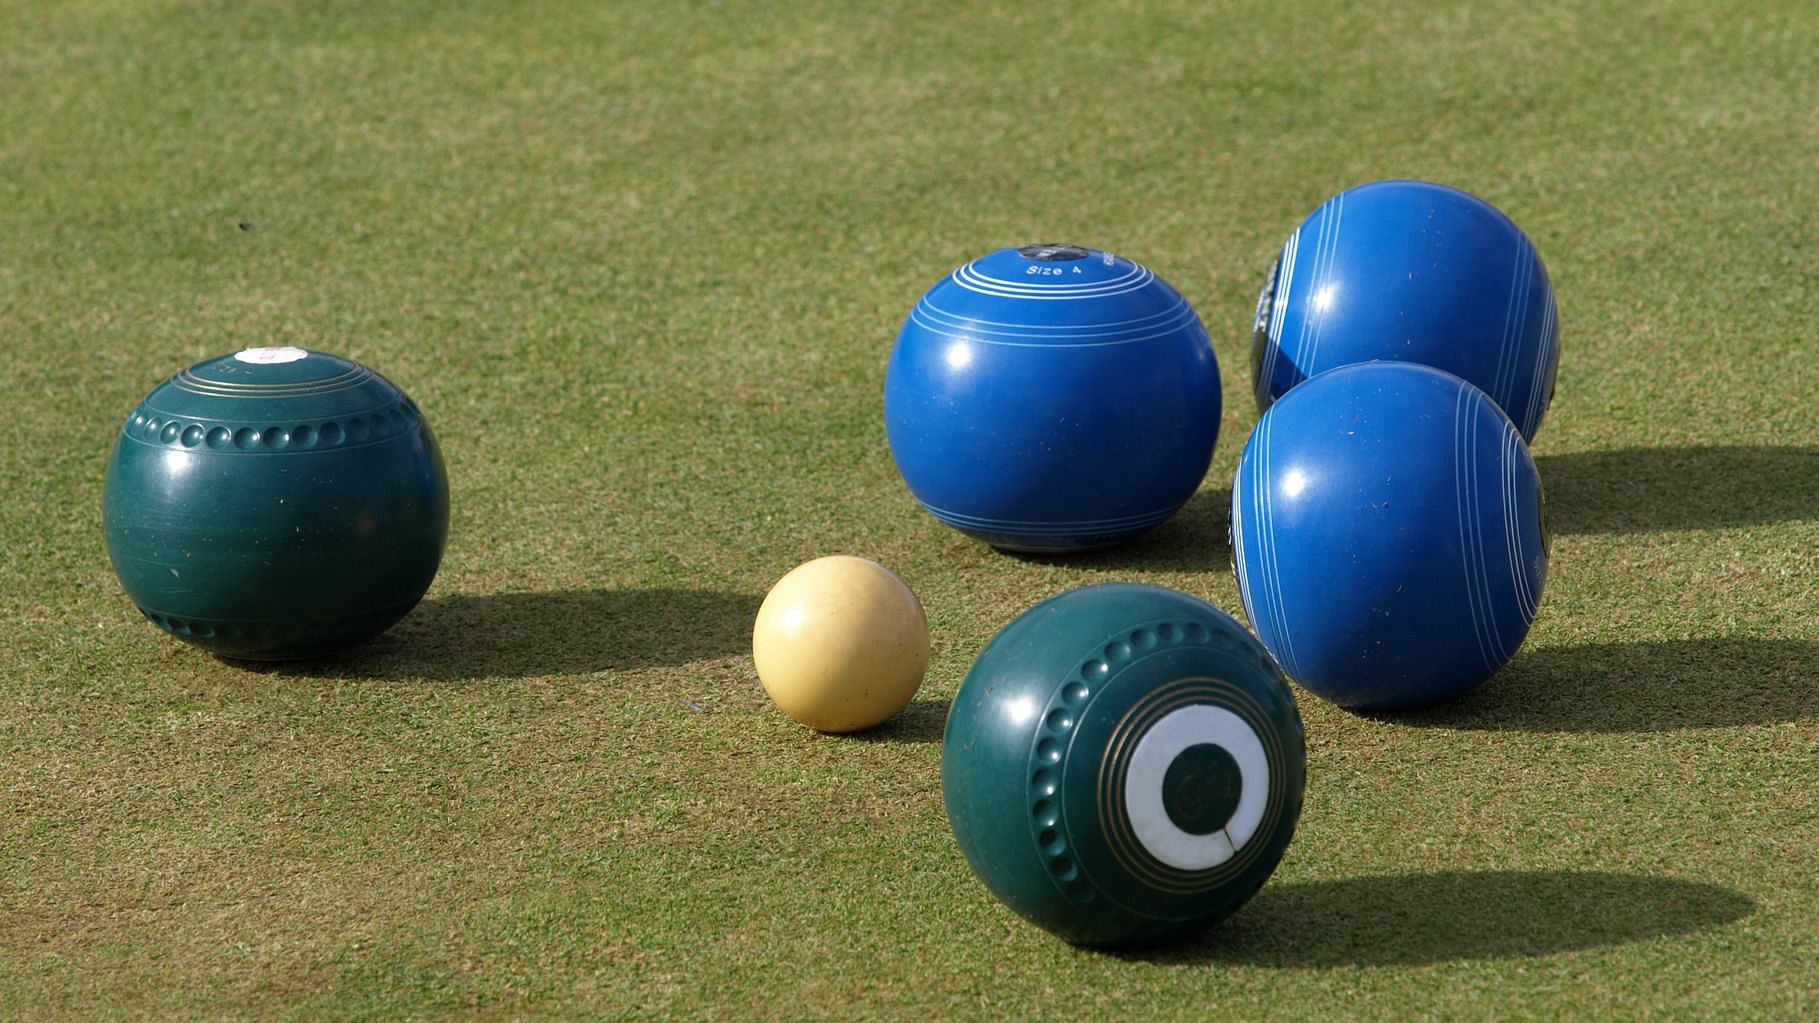 <div class="paragraphs"><p>The Indian men's lawn bowls fours teams has entered the gold medal match.</p></div>